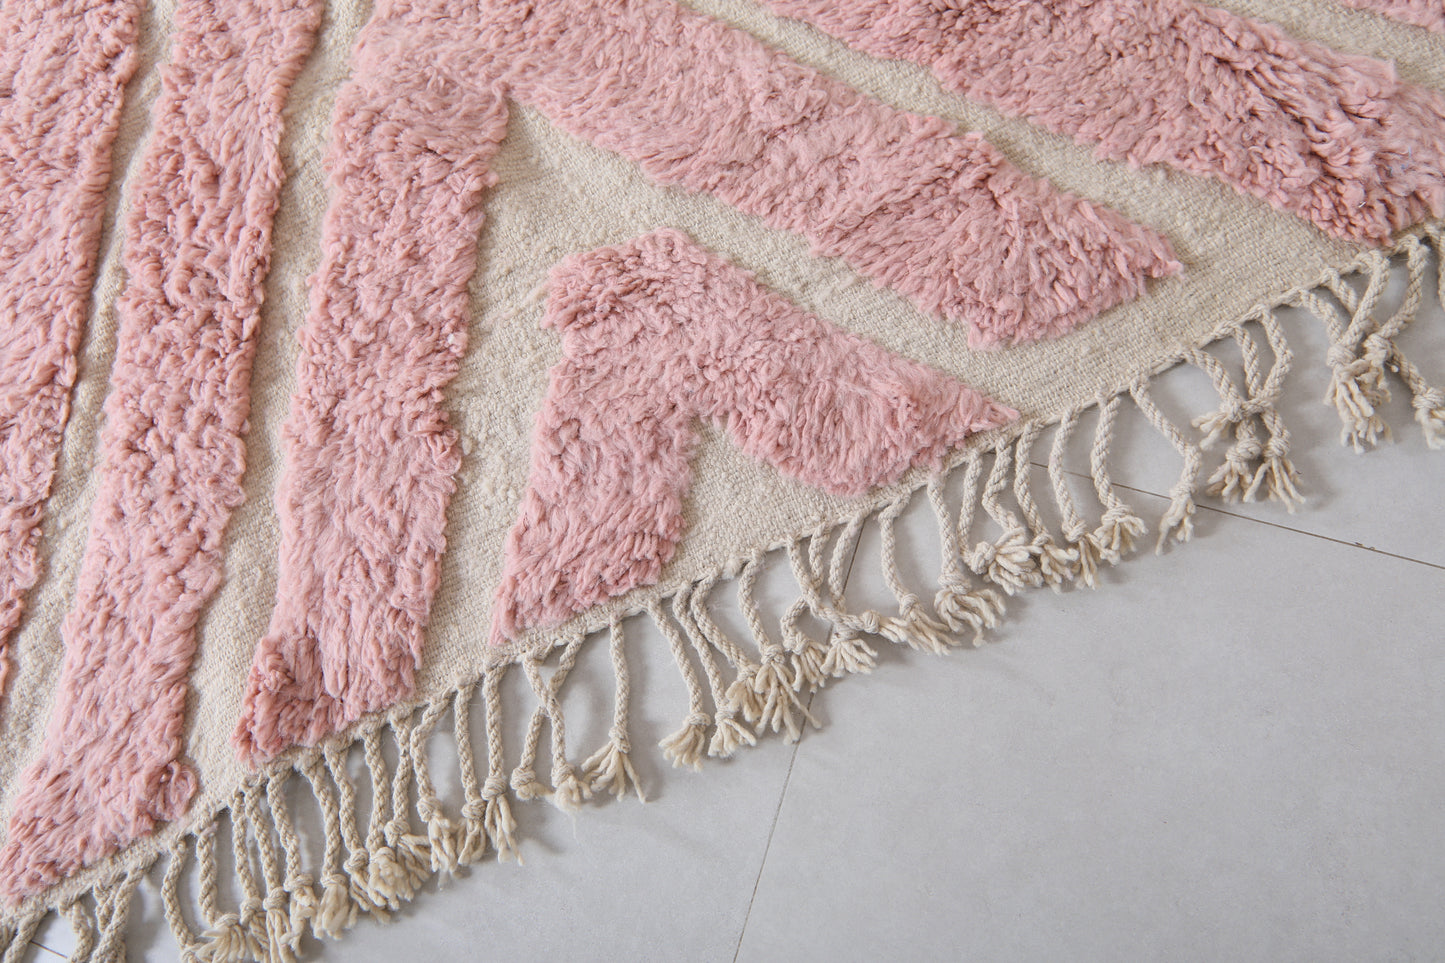 Beni ourain rug 7.4 x 10.9 Feet - Pink minimalist rug